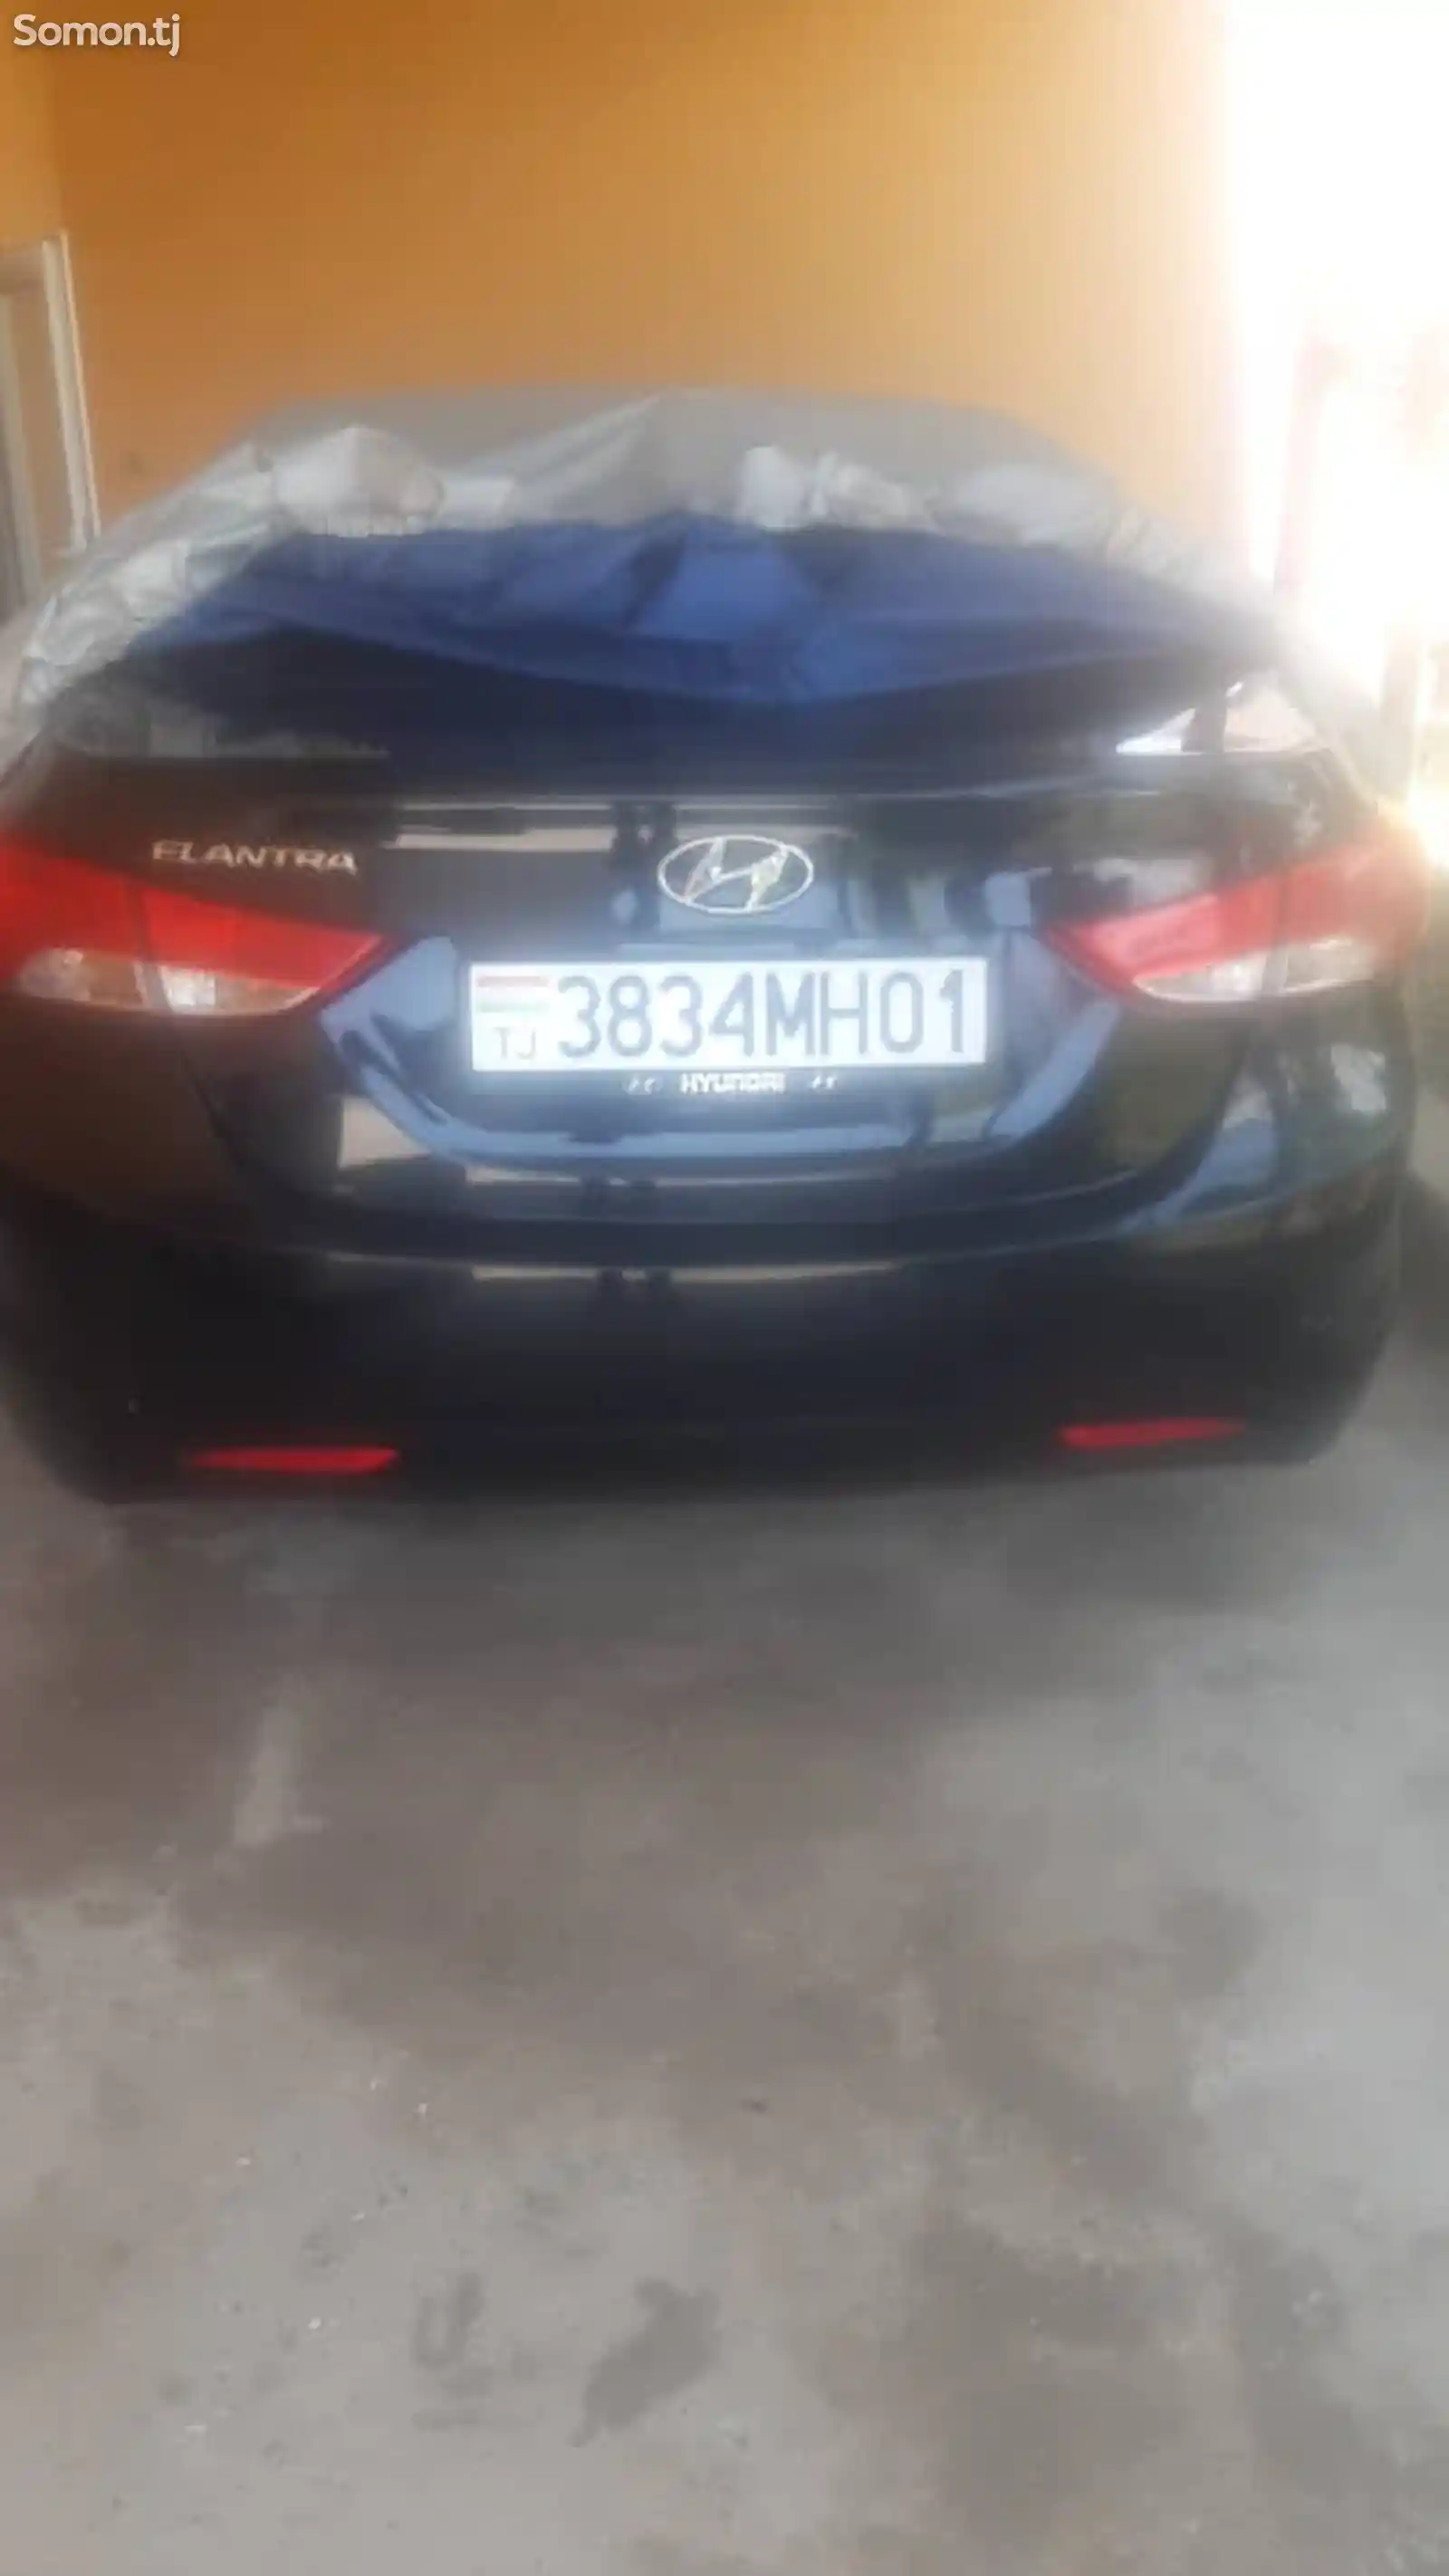 Hyundai Elantra, 2014-2